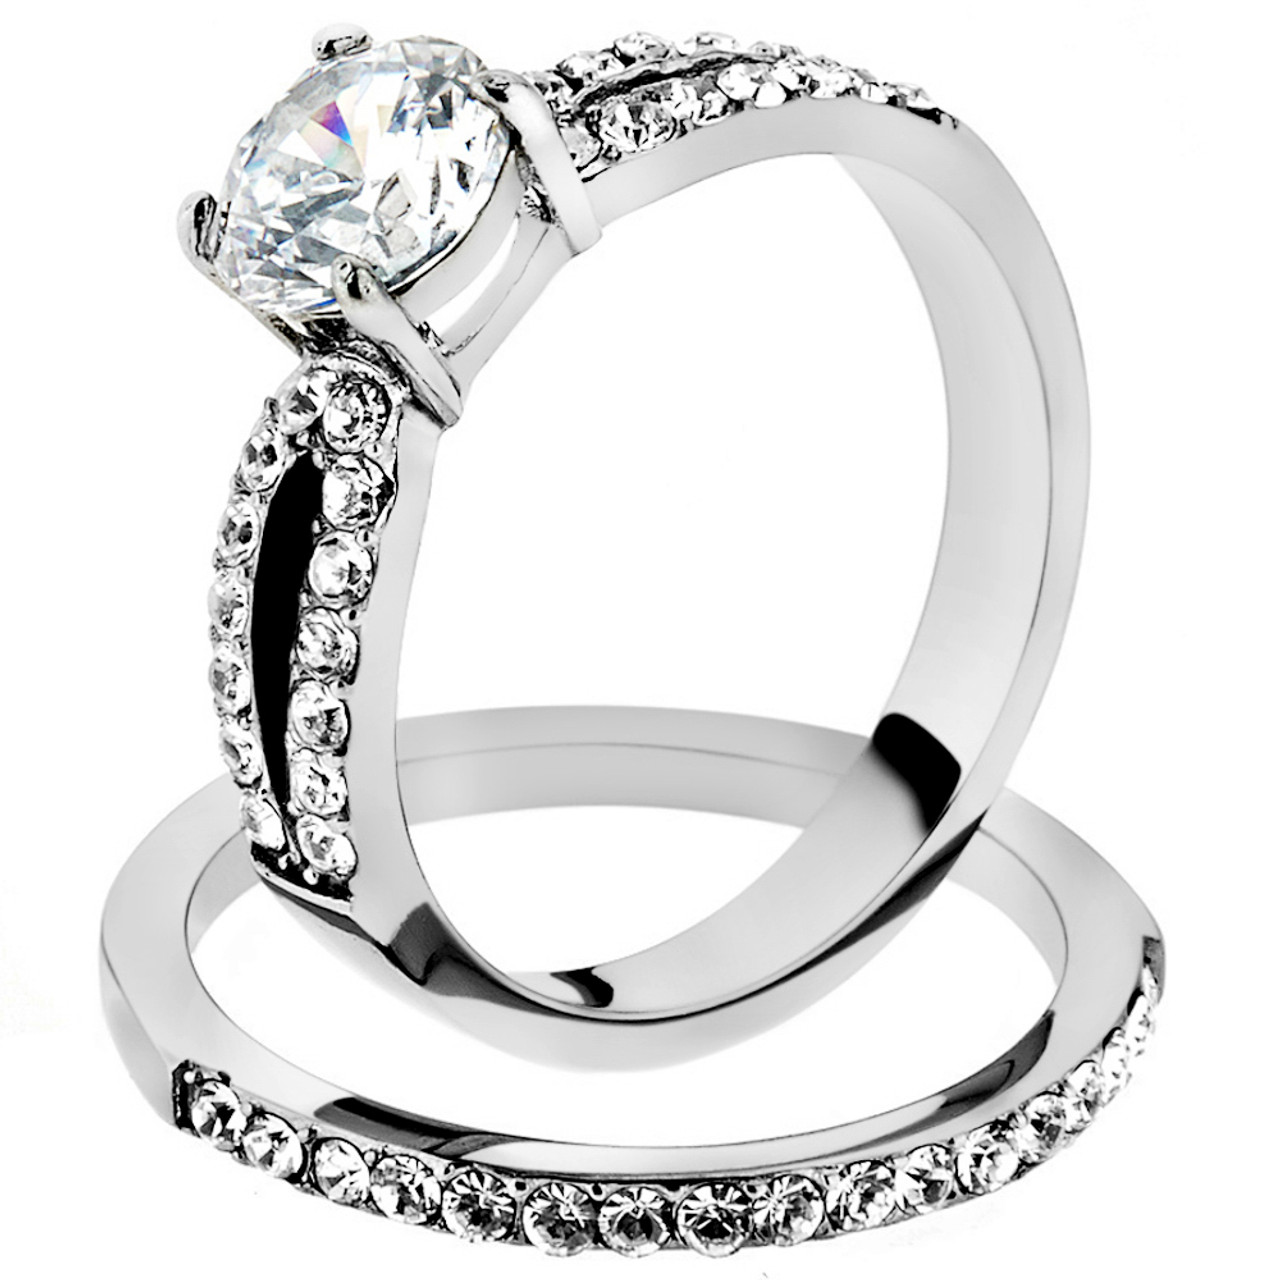 2.35 Ct Round Cut CZ Stainless Steel Wedding Engagement Ring Set Women's Sz 5-10 